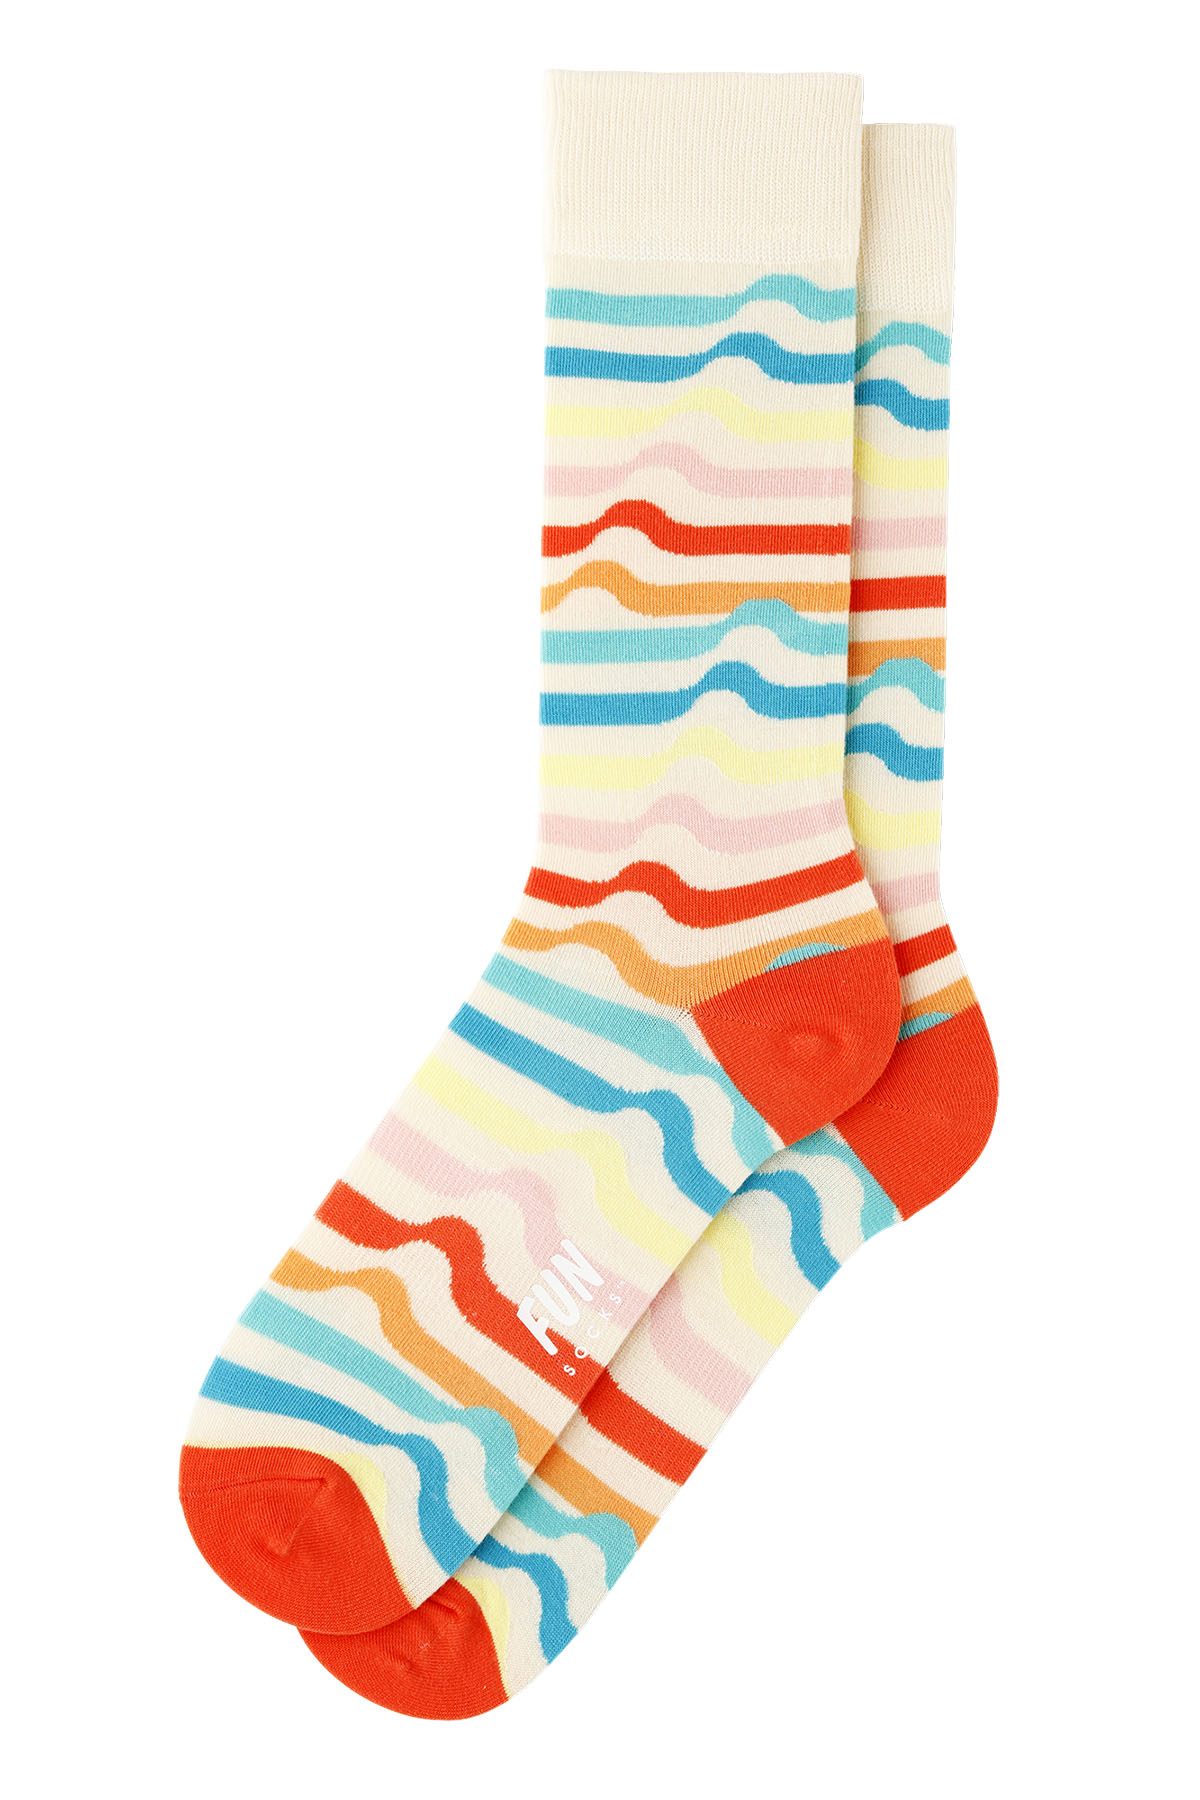 Fun Socks Pastel Rainbow Ribbon Stripe Crew Socks